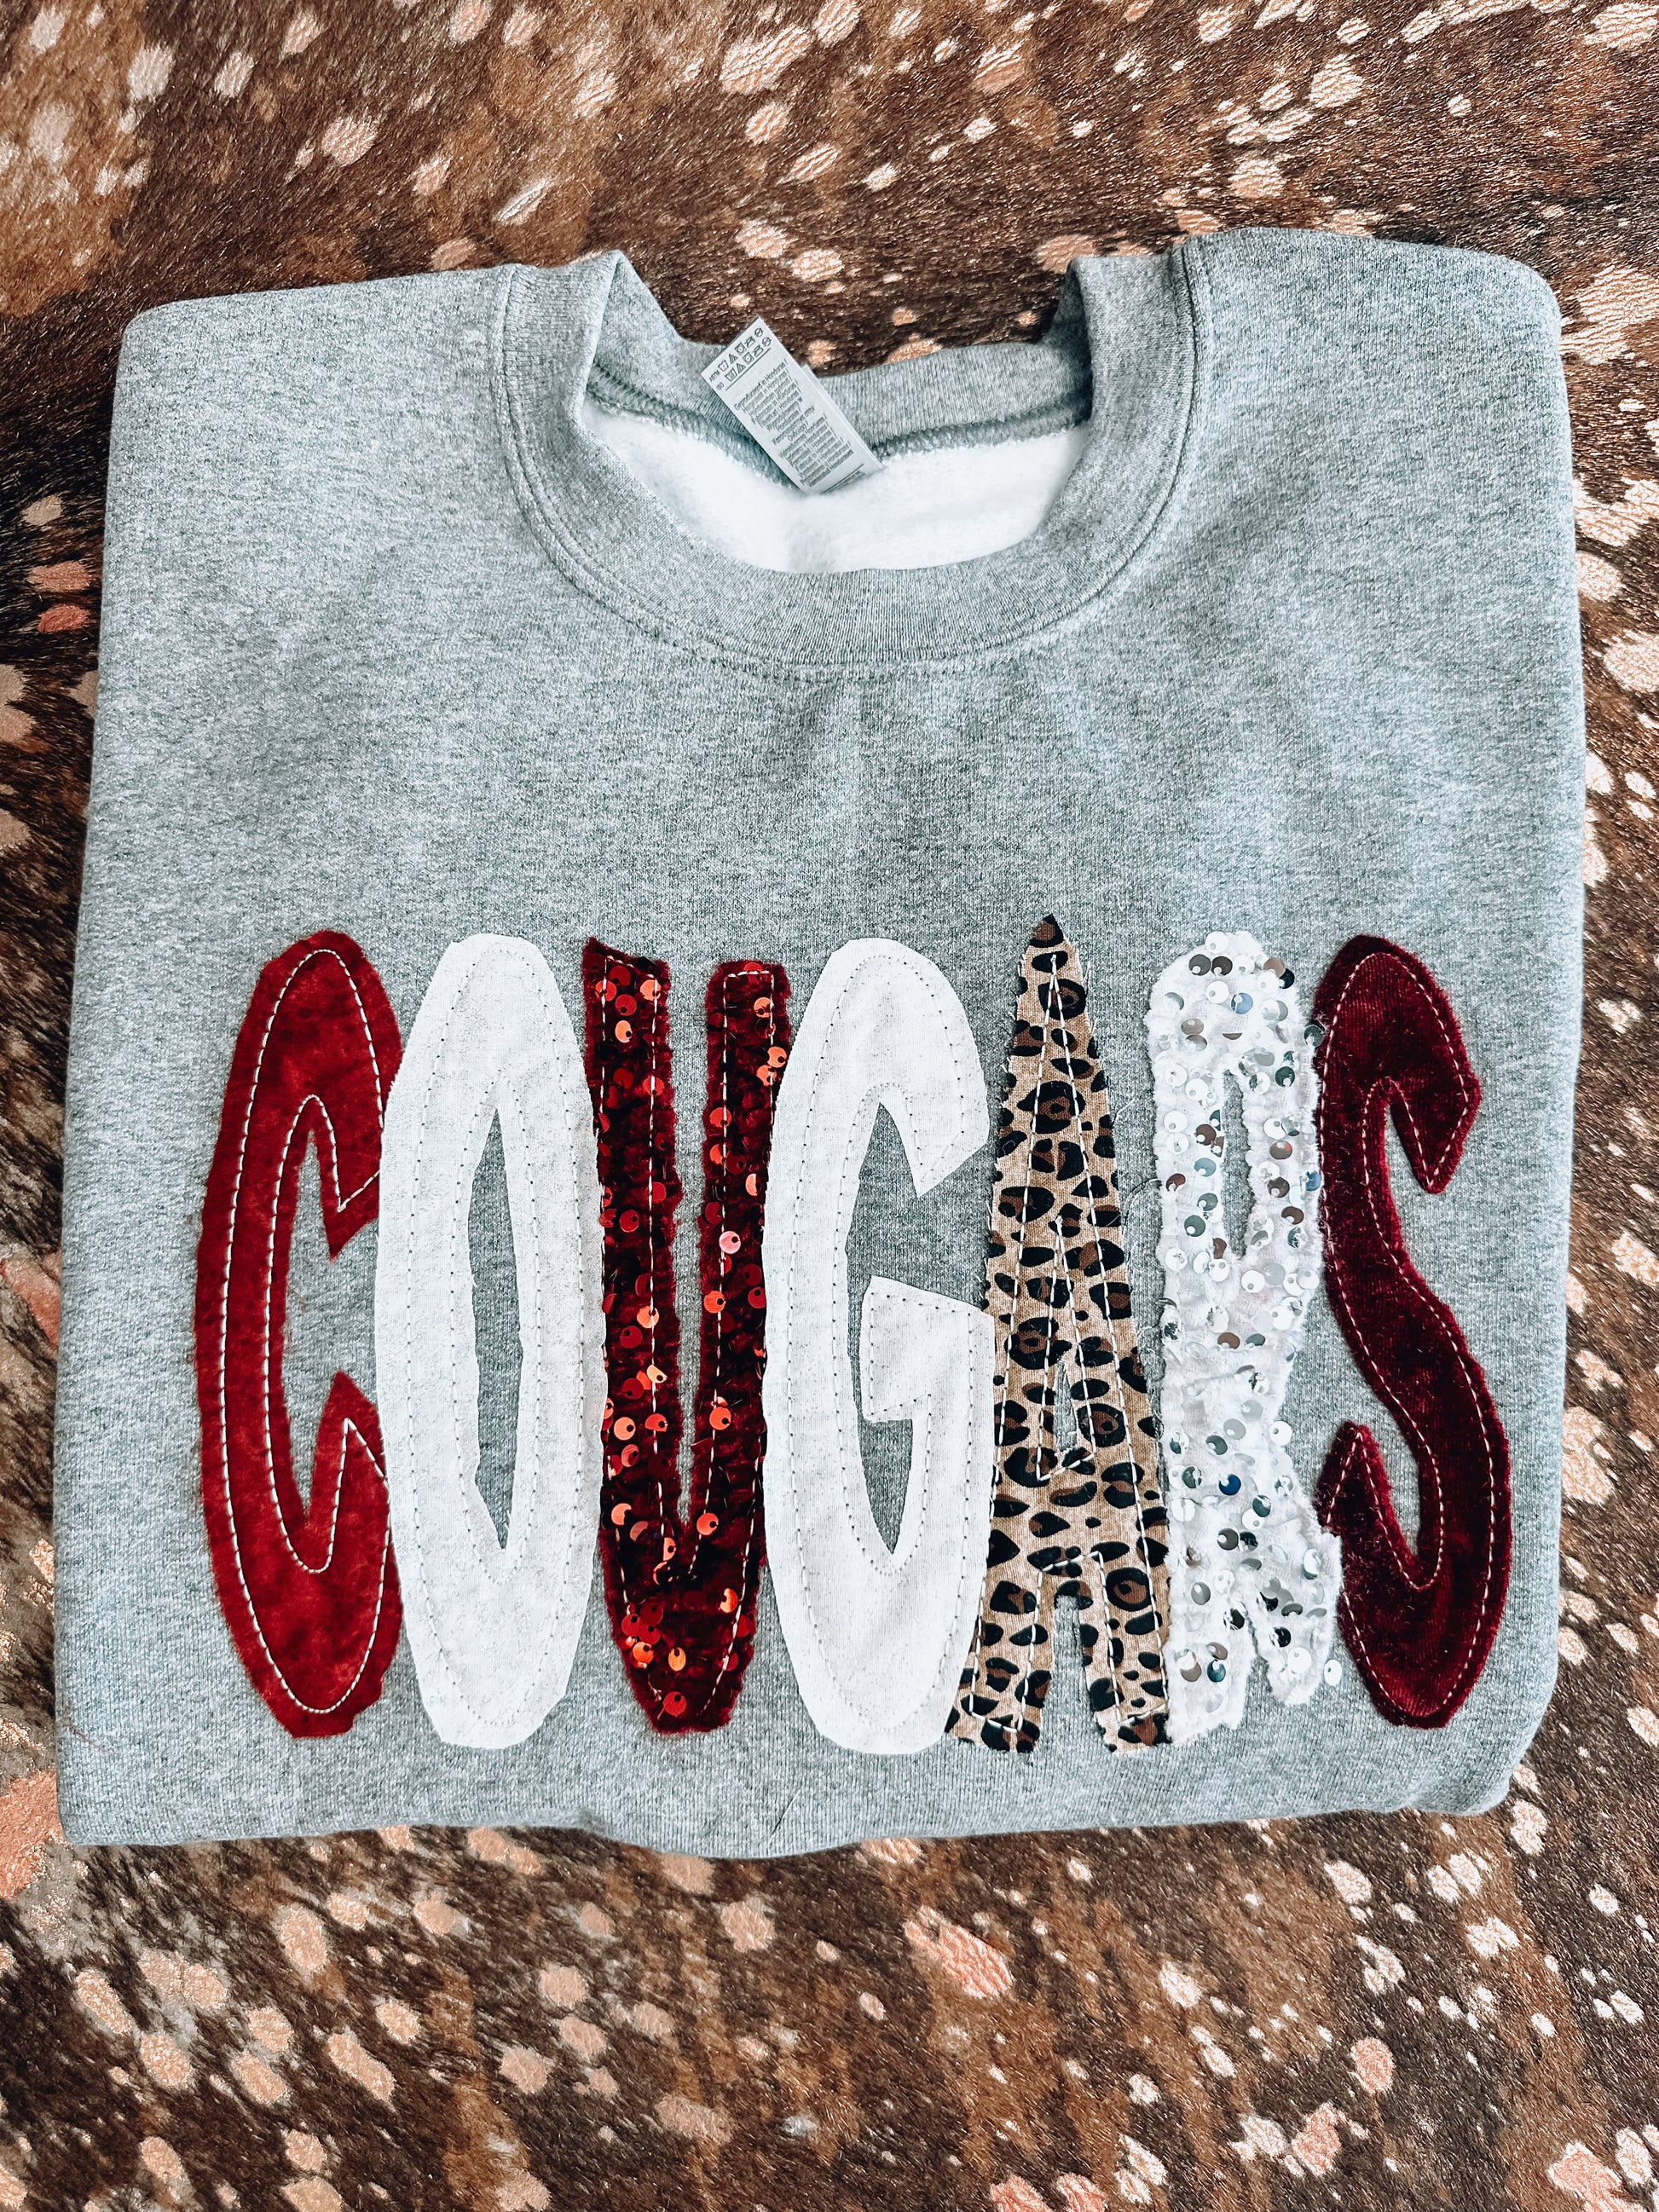 Cougar Sweatshirt - Southern Divas Boutique